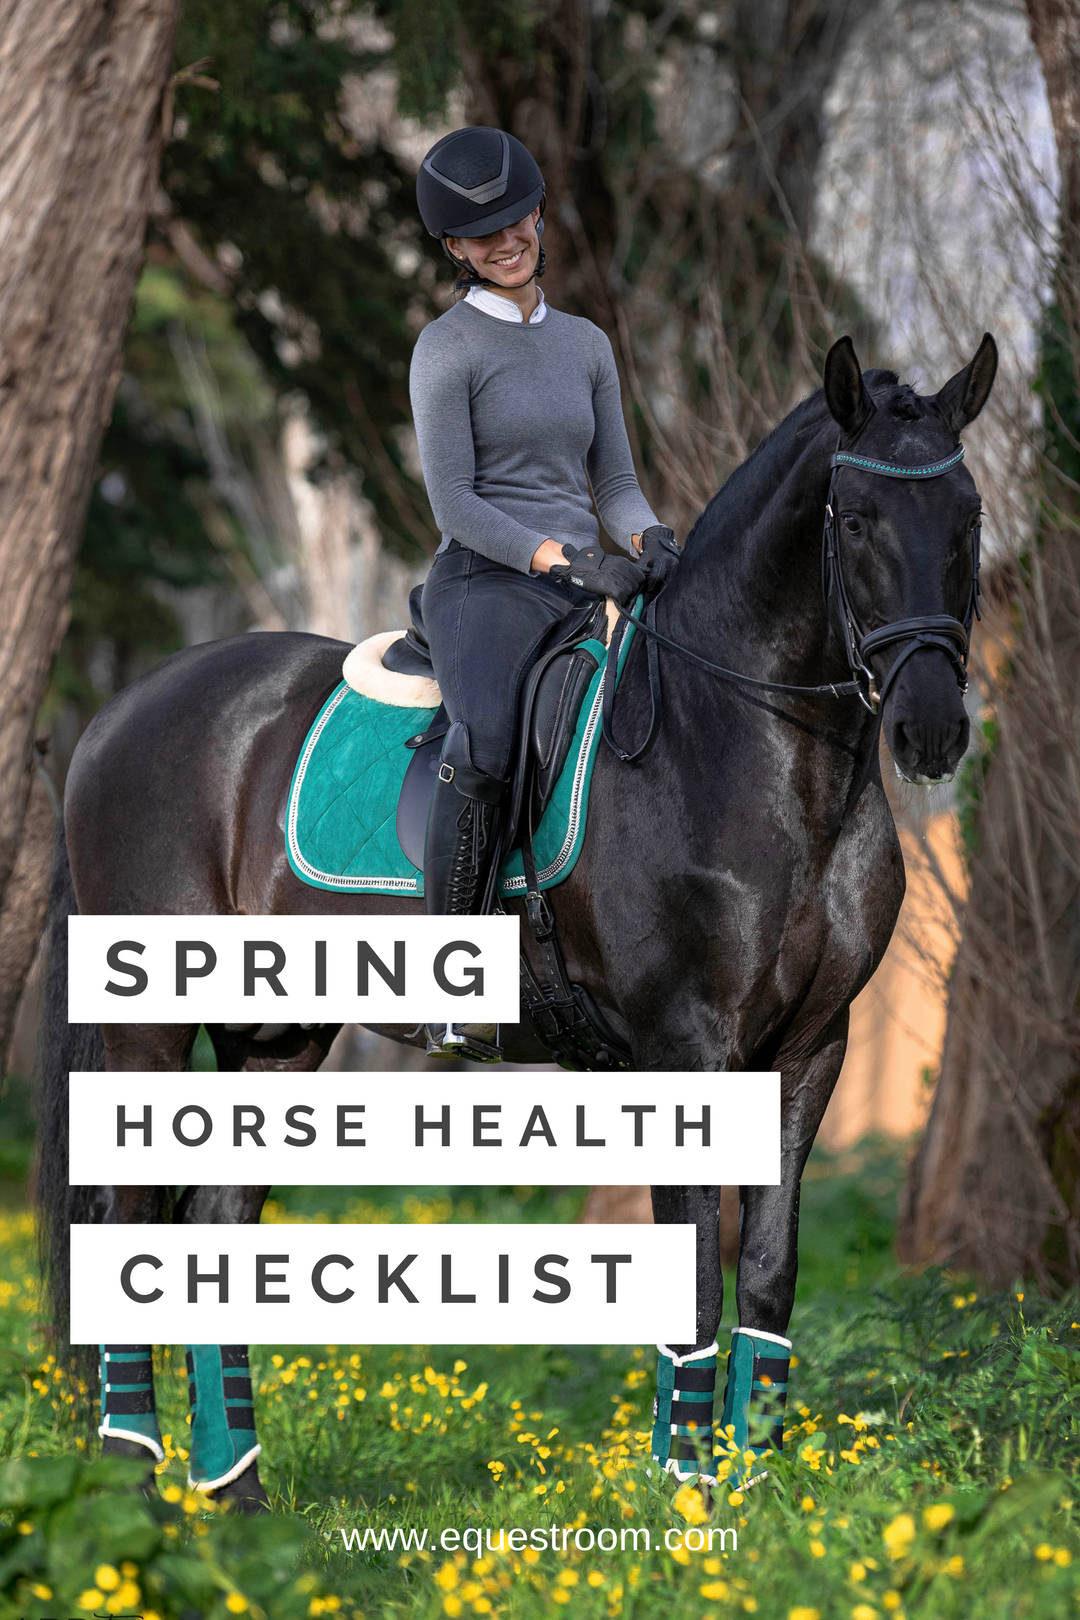 SPRING HORSE HEALTH CHECKLIST